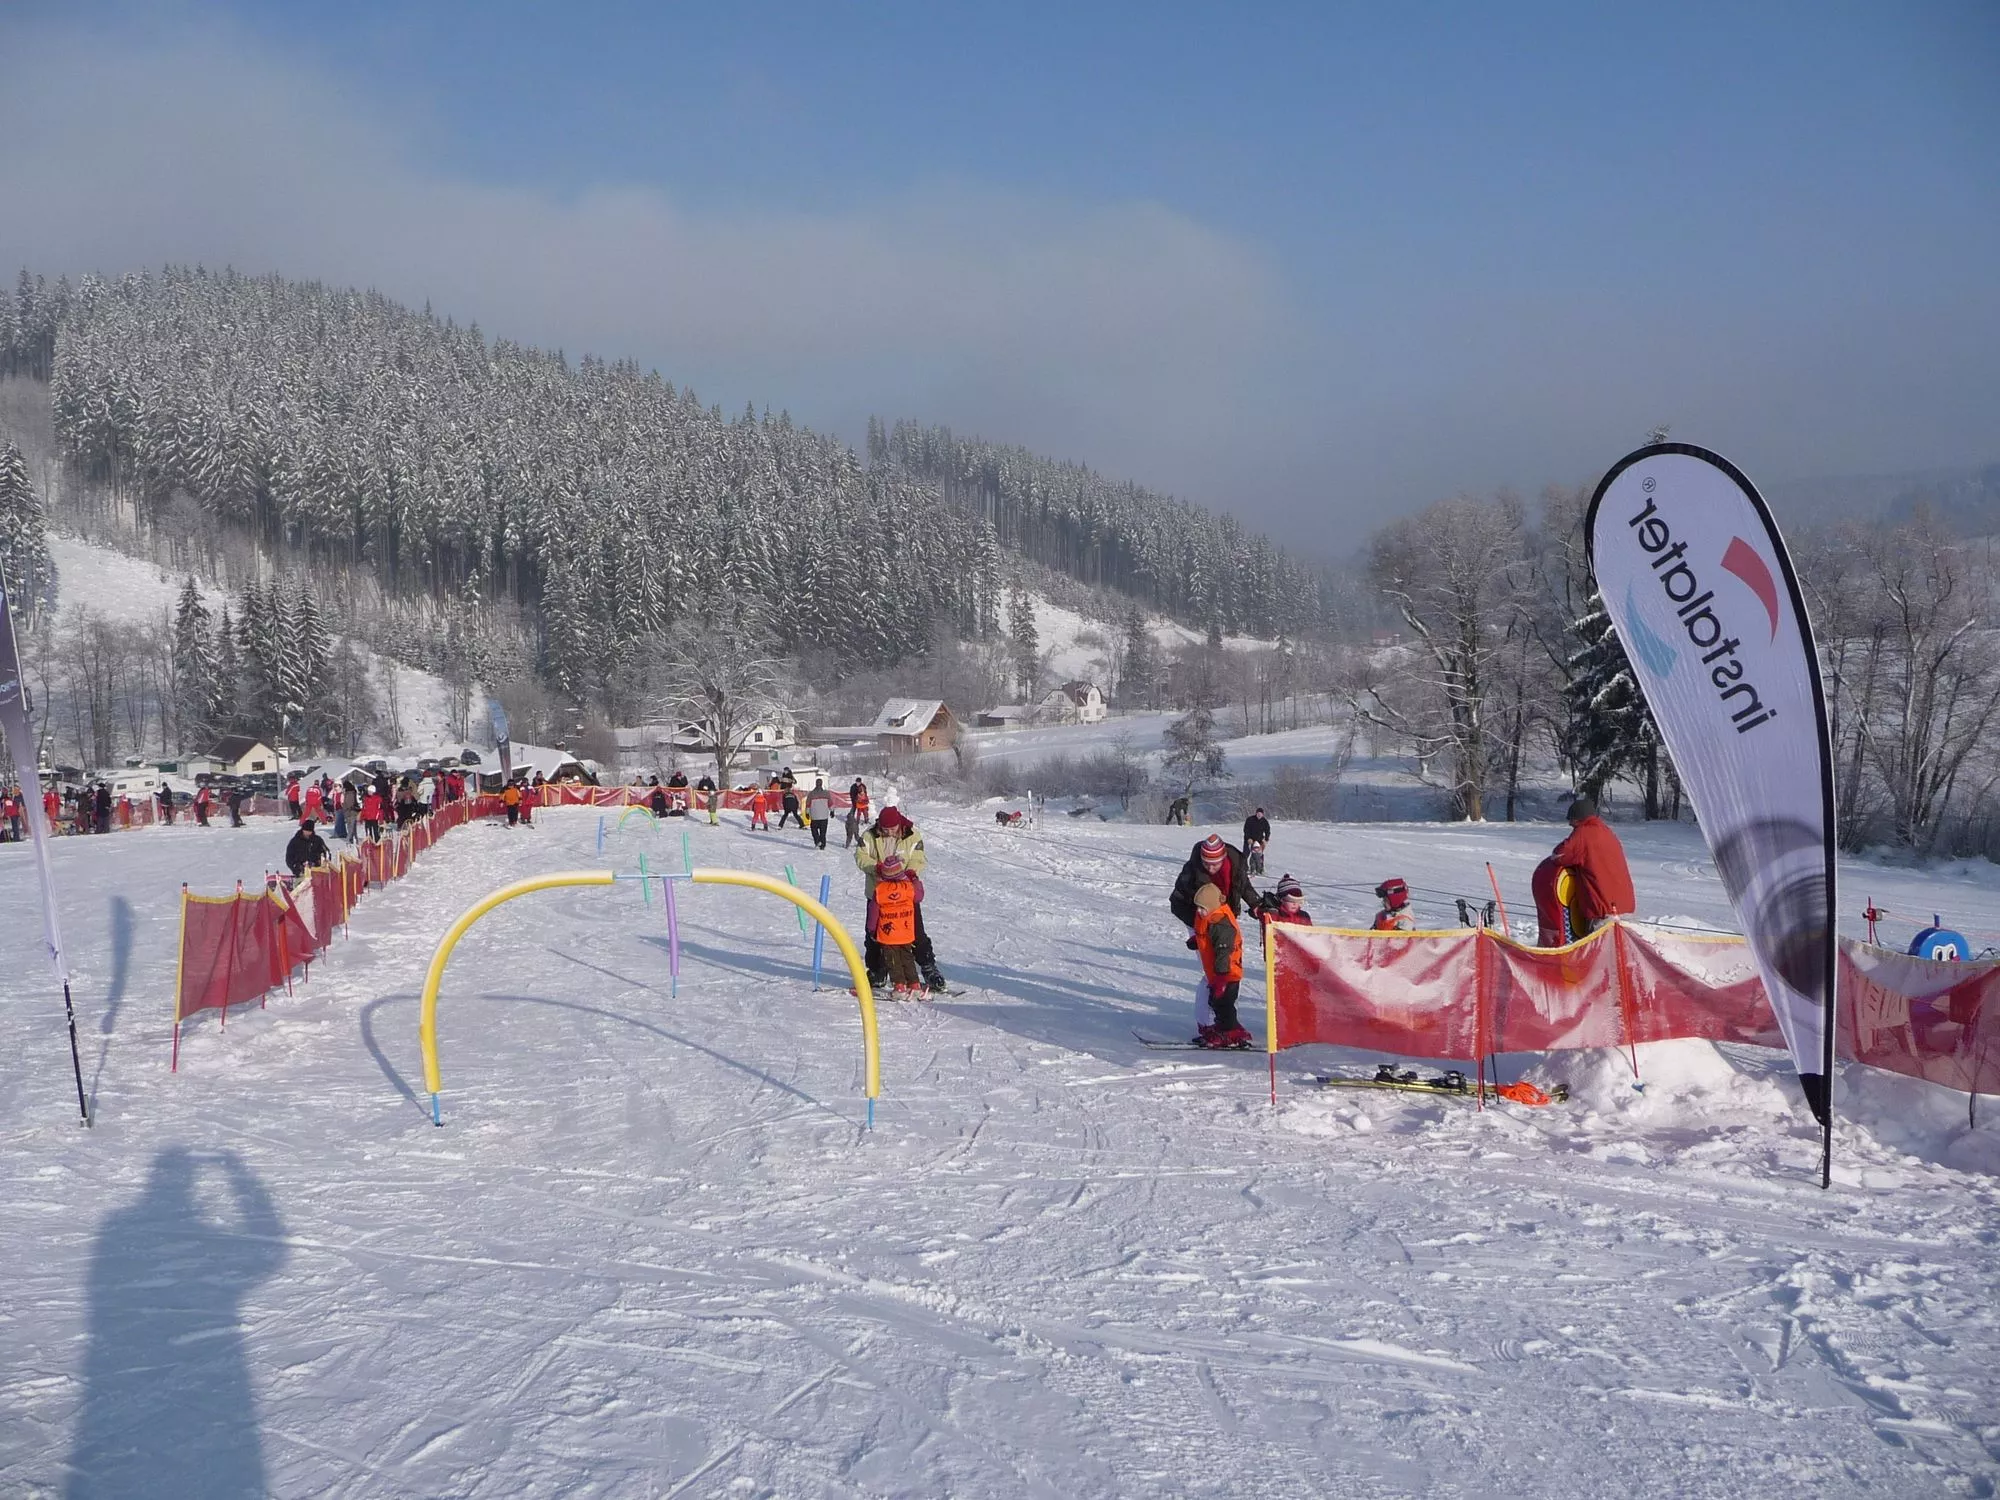 Ski Opalisko in Slovakia, Europe | Snowboarding,Skiing - Rated 3.7